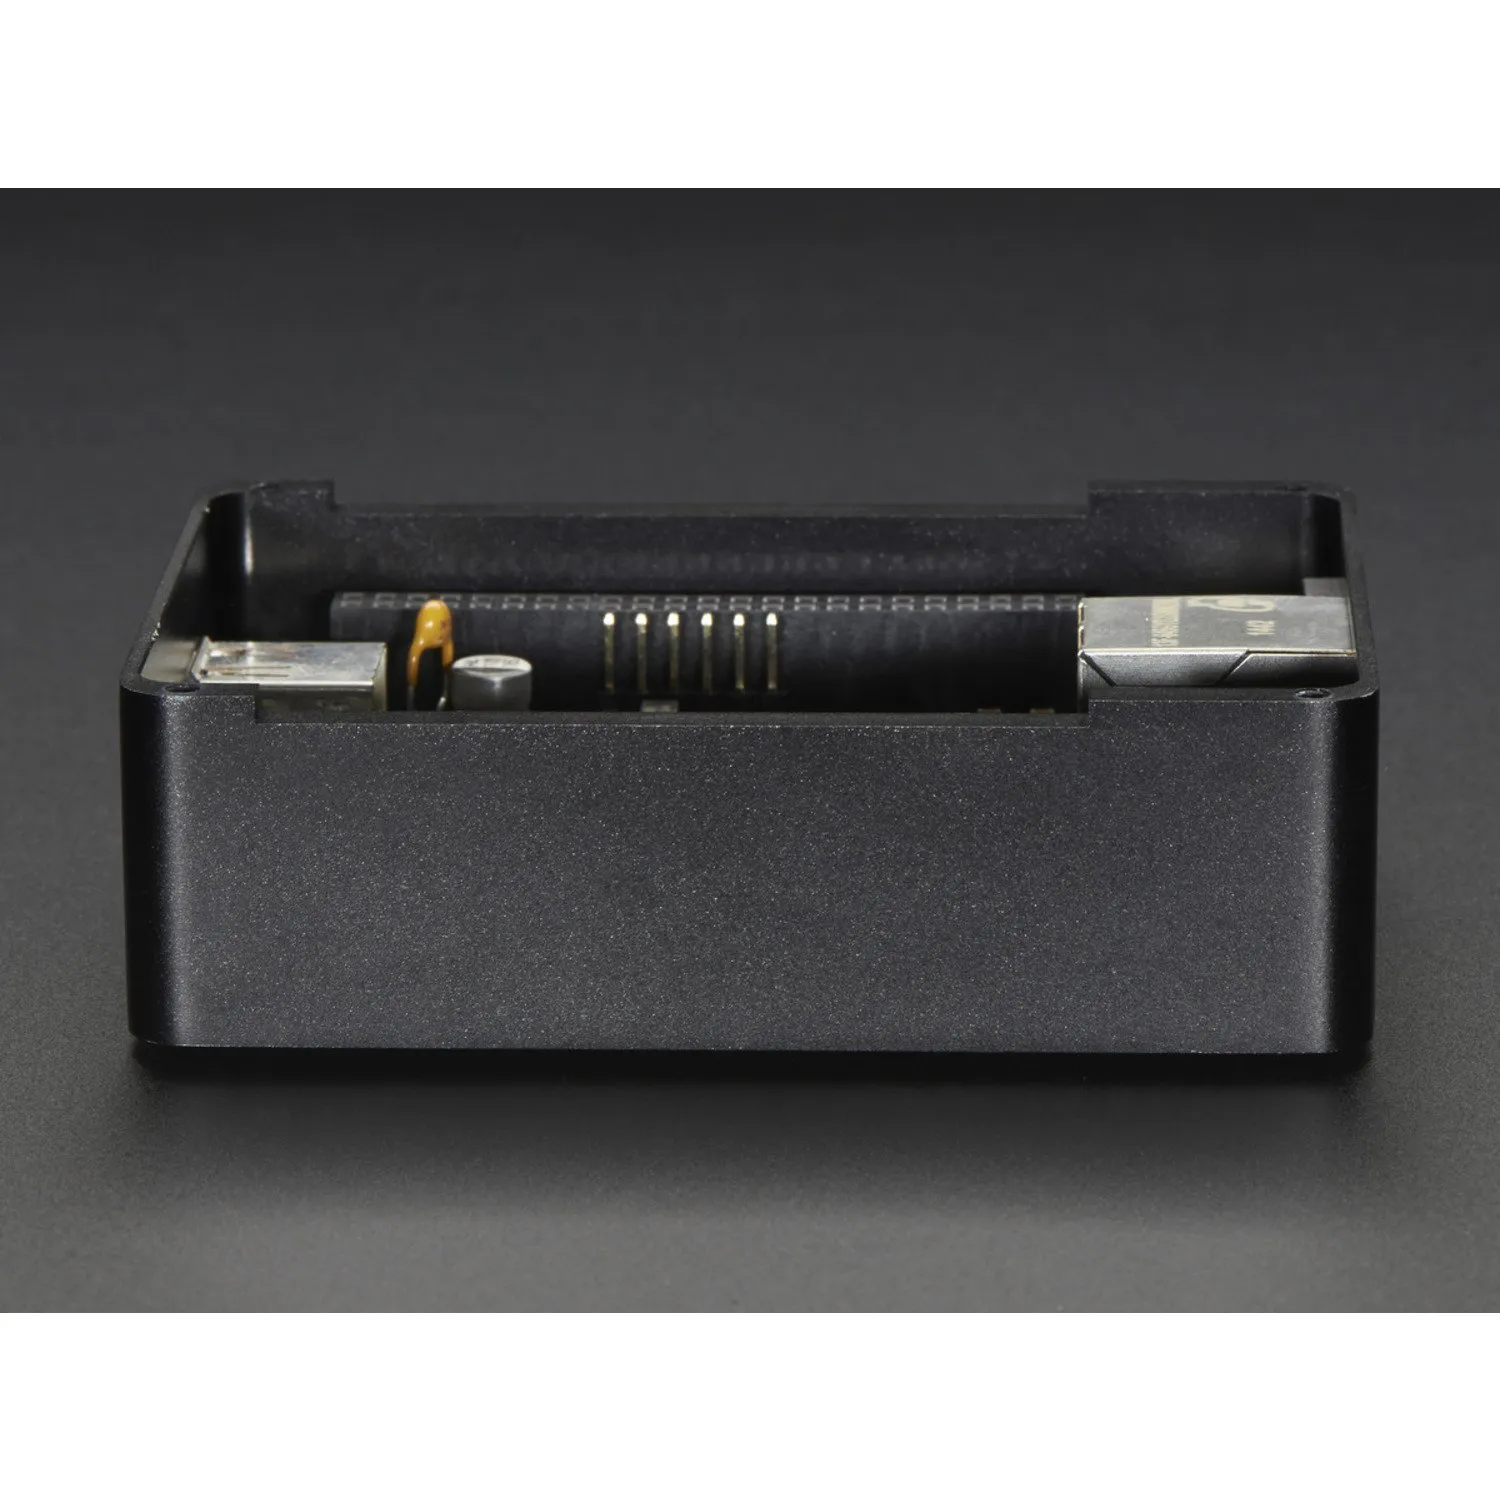 Photo of Anidees Beaglebone Black Case - Black Aluminum with Smoke Top